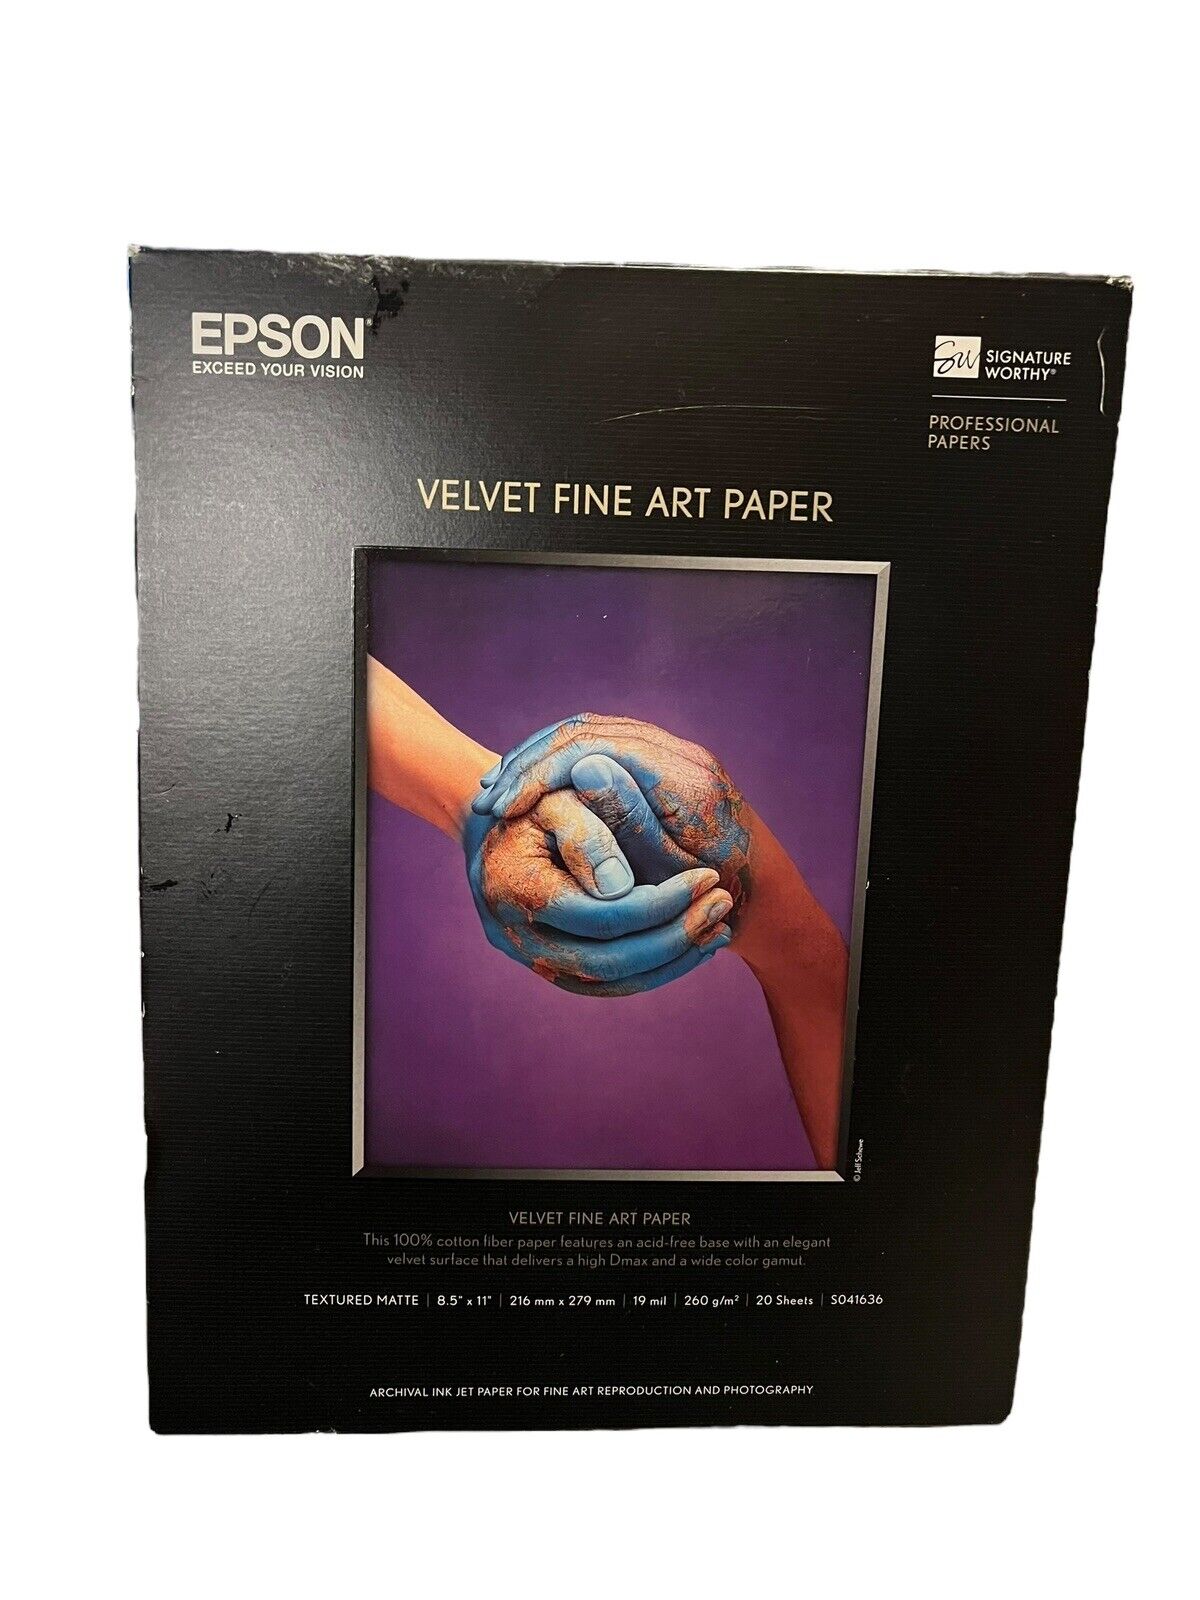 Epson -Velvet Fine Art Paper (8.5x11 Inches 20 Sheets) Textured Matte S041636 C5